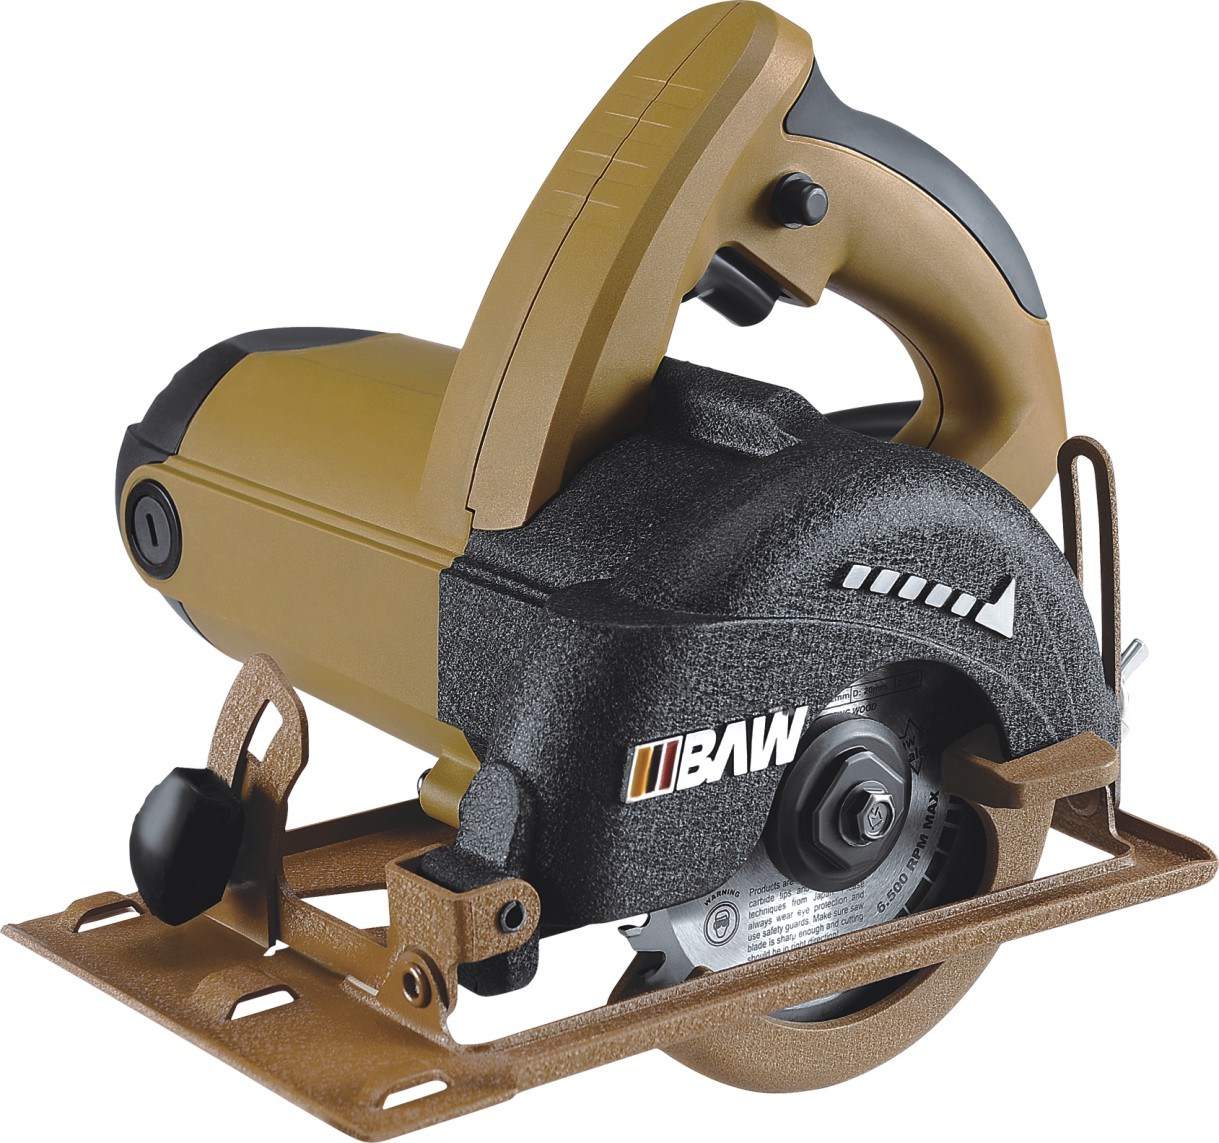 Power Tool 110mm Circular Saw for Wood Cutting